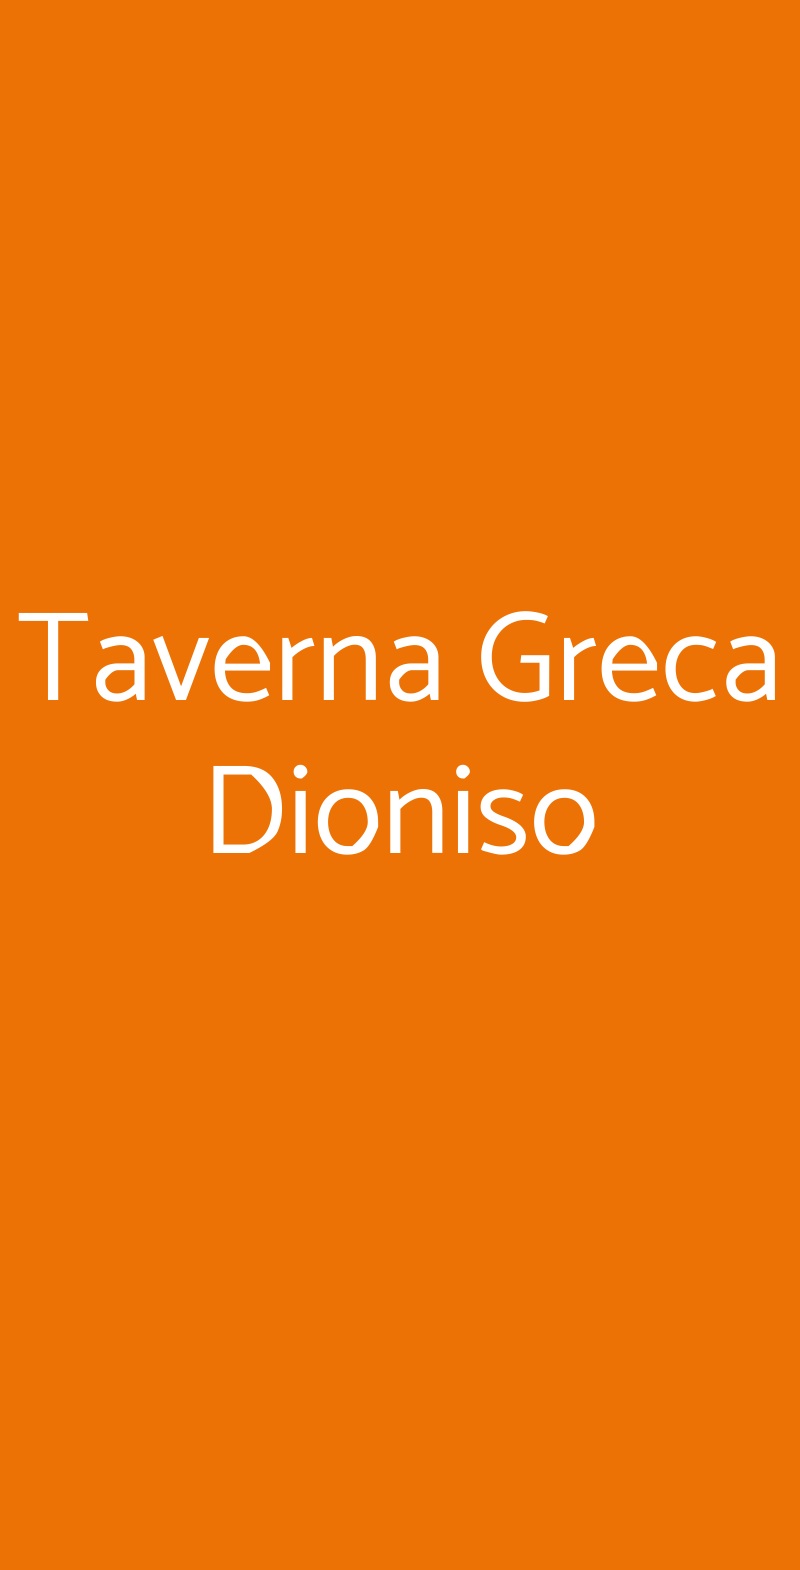 Taverna Greca Dioniso Firenze menù 1 pagina